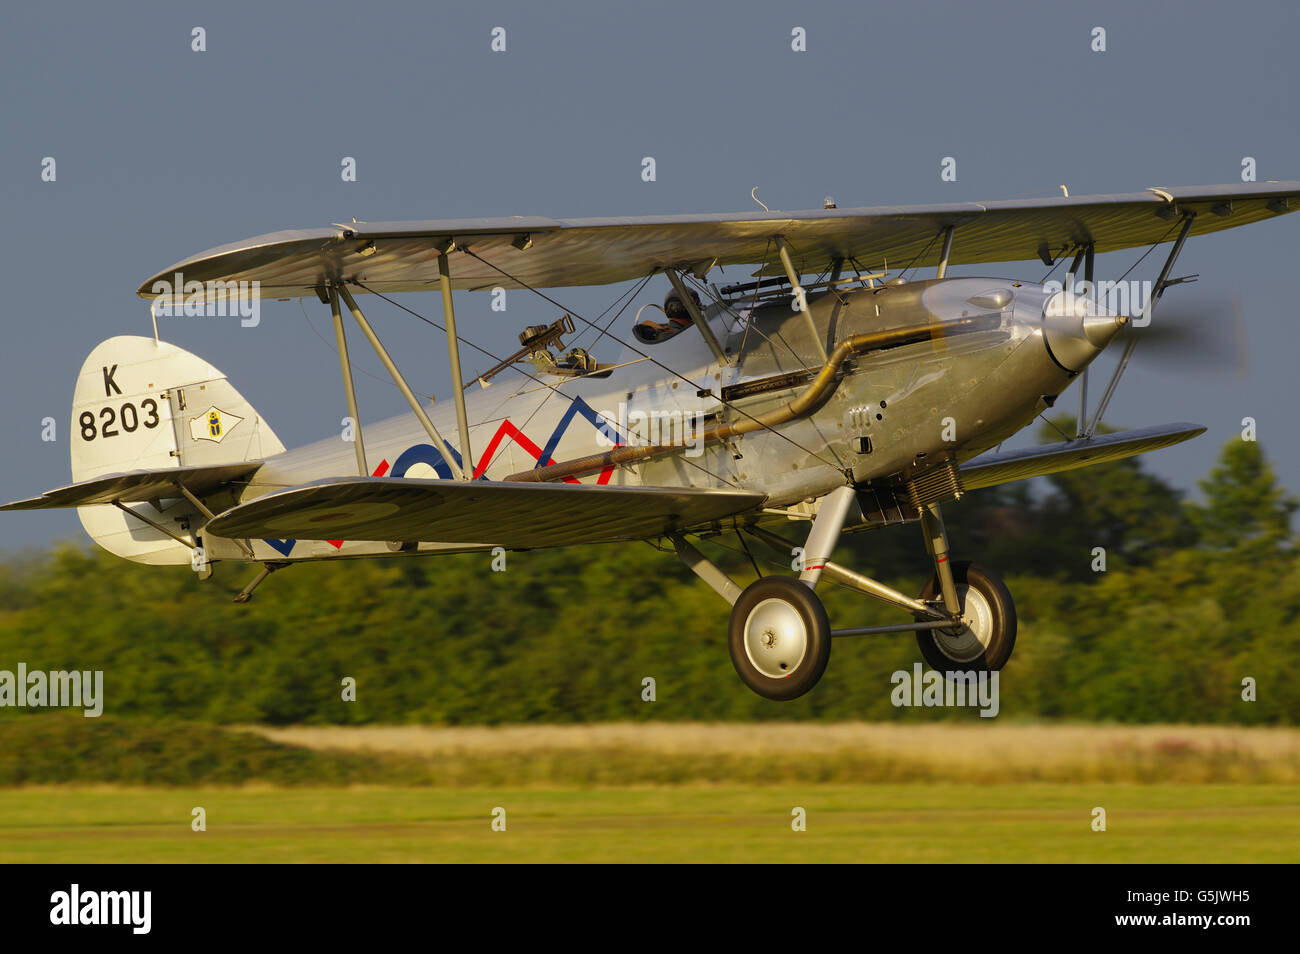 Hawker Demon K-8203, G-BTVE, alla Shuttleworth Collection, Foto Stock